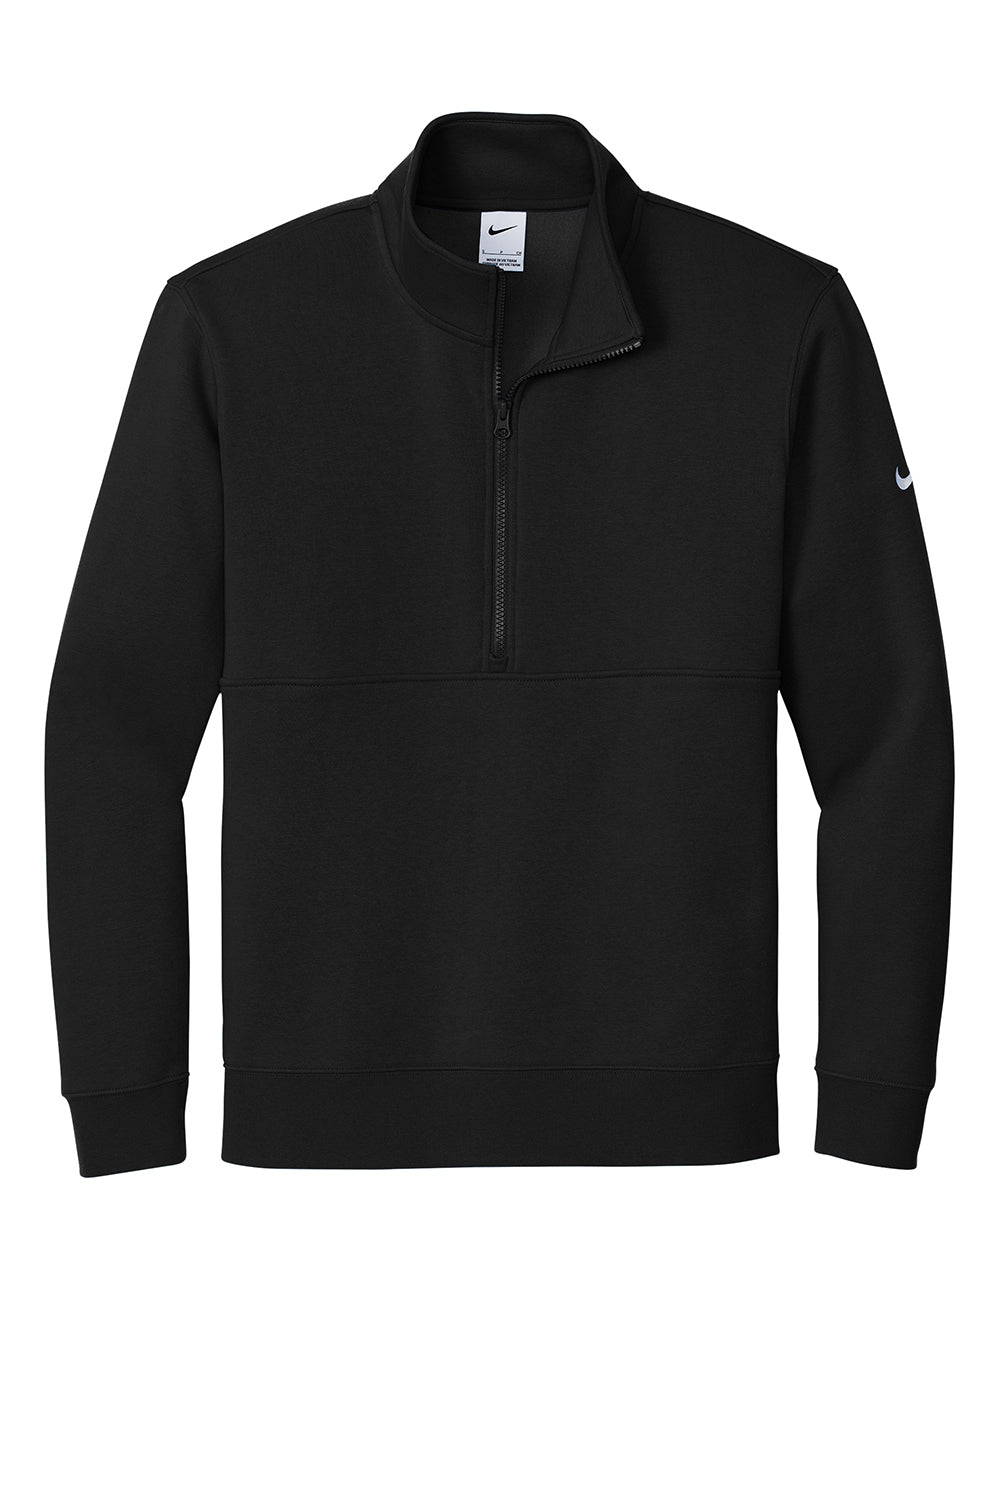 Nike NKDX6718 Mens Club Fleece 1/4 Zip Sweatshirt Black Flat Front